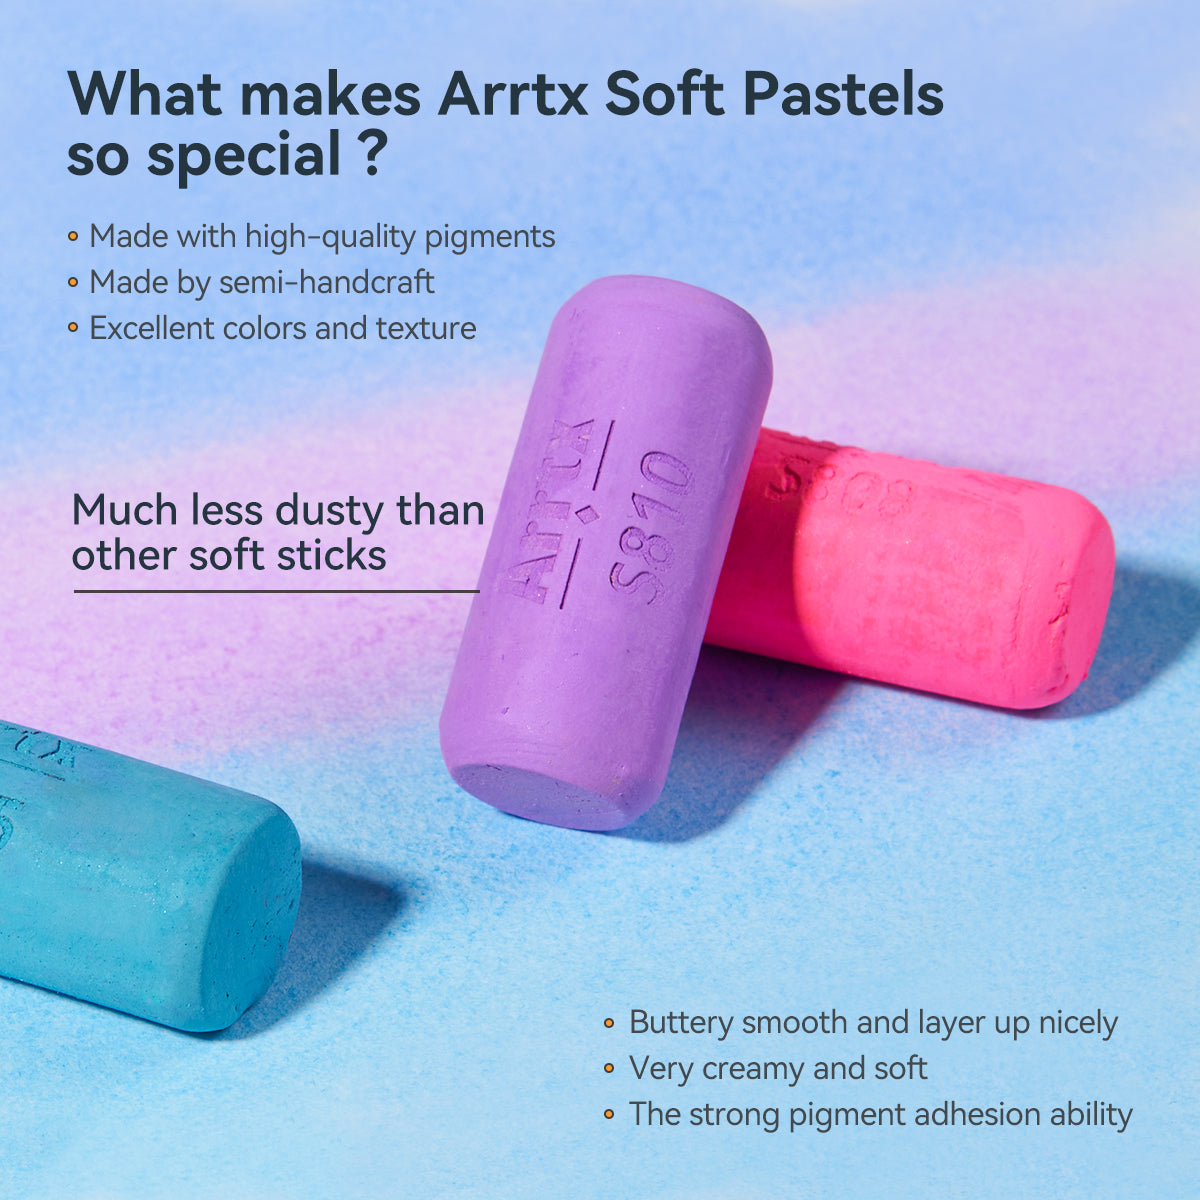 Arrtx 72 Colors Oil Pastels Smooth Drawing Pastel Set – ArrtxArt